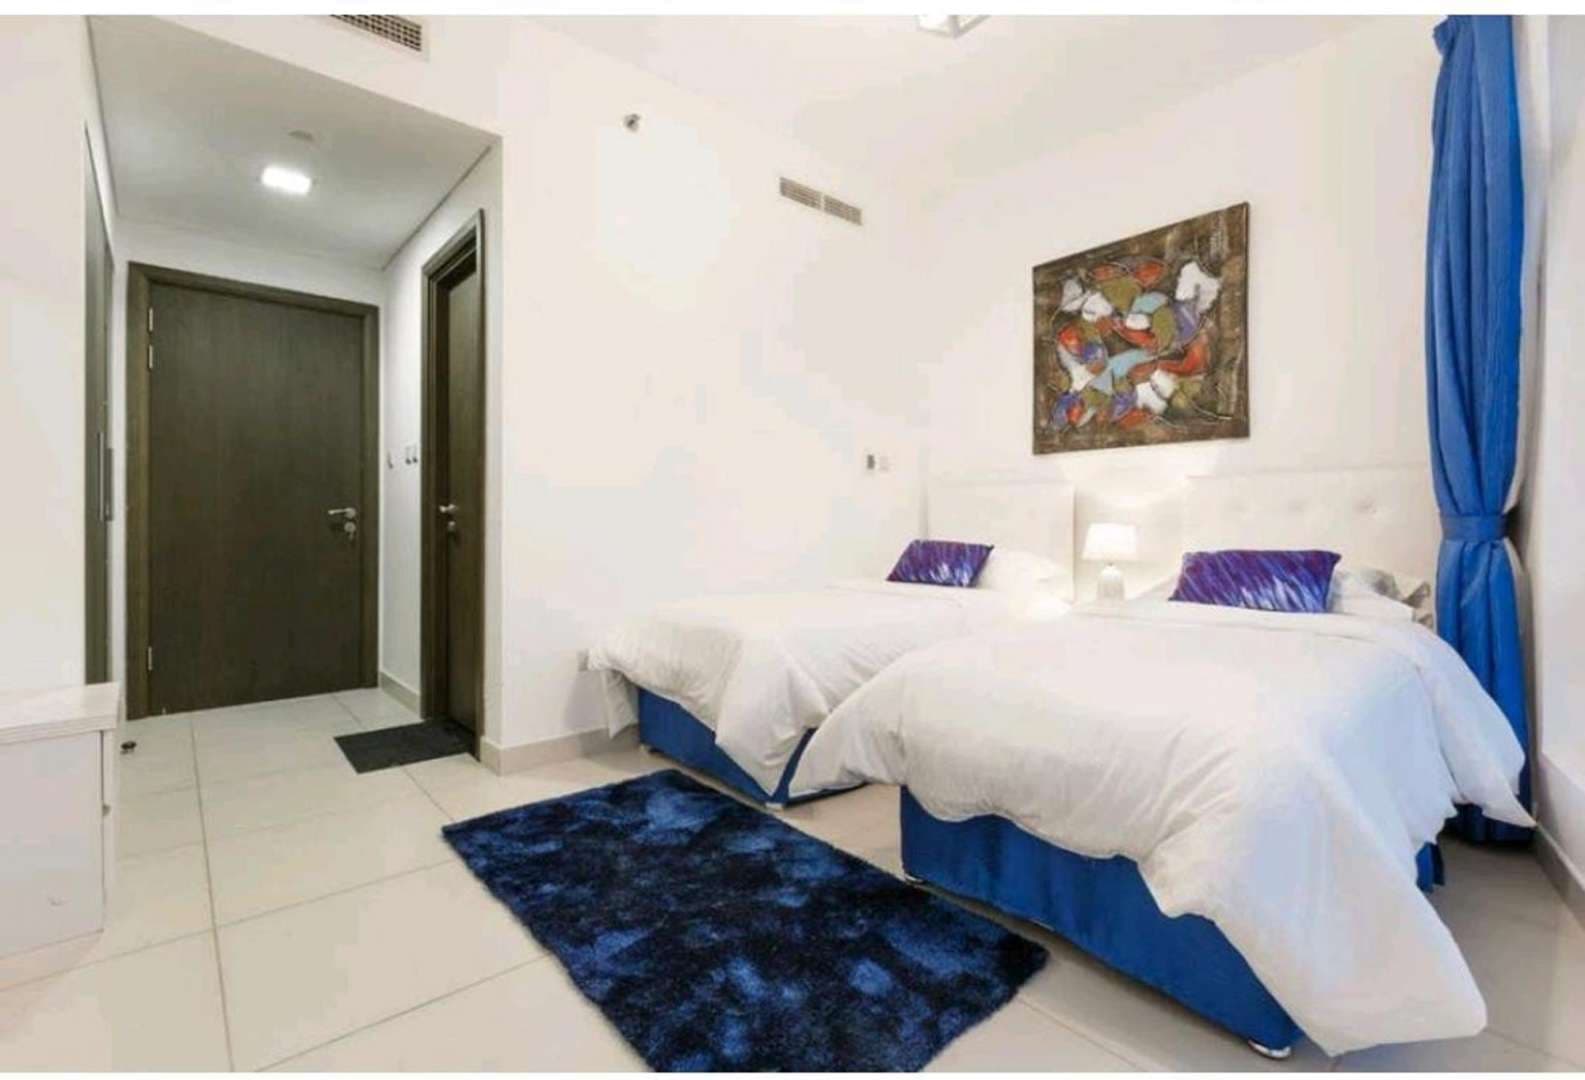 2 Bedroom Apartment For Rent The Lofts Lp06650 1780efebdb9b9b00.jpeg